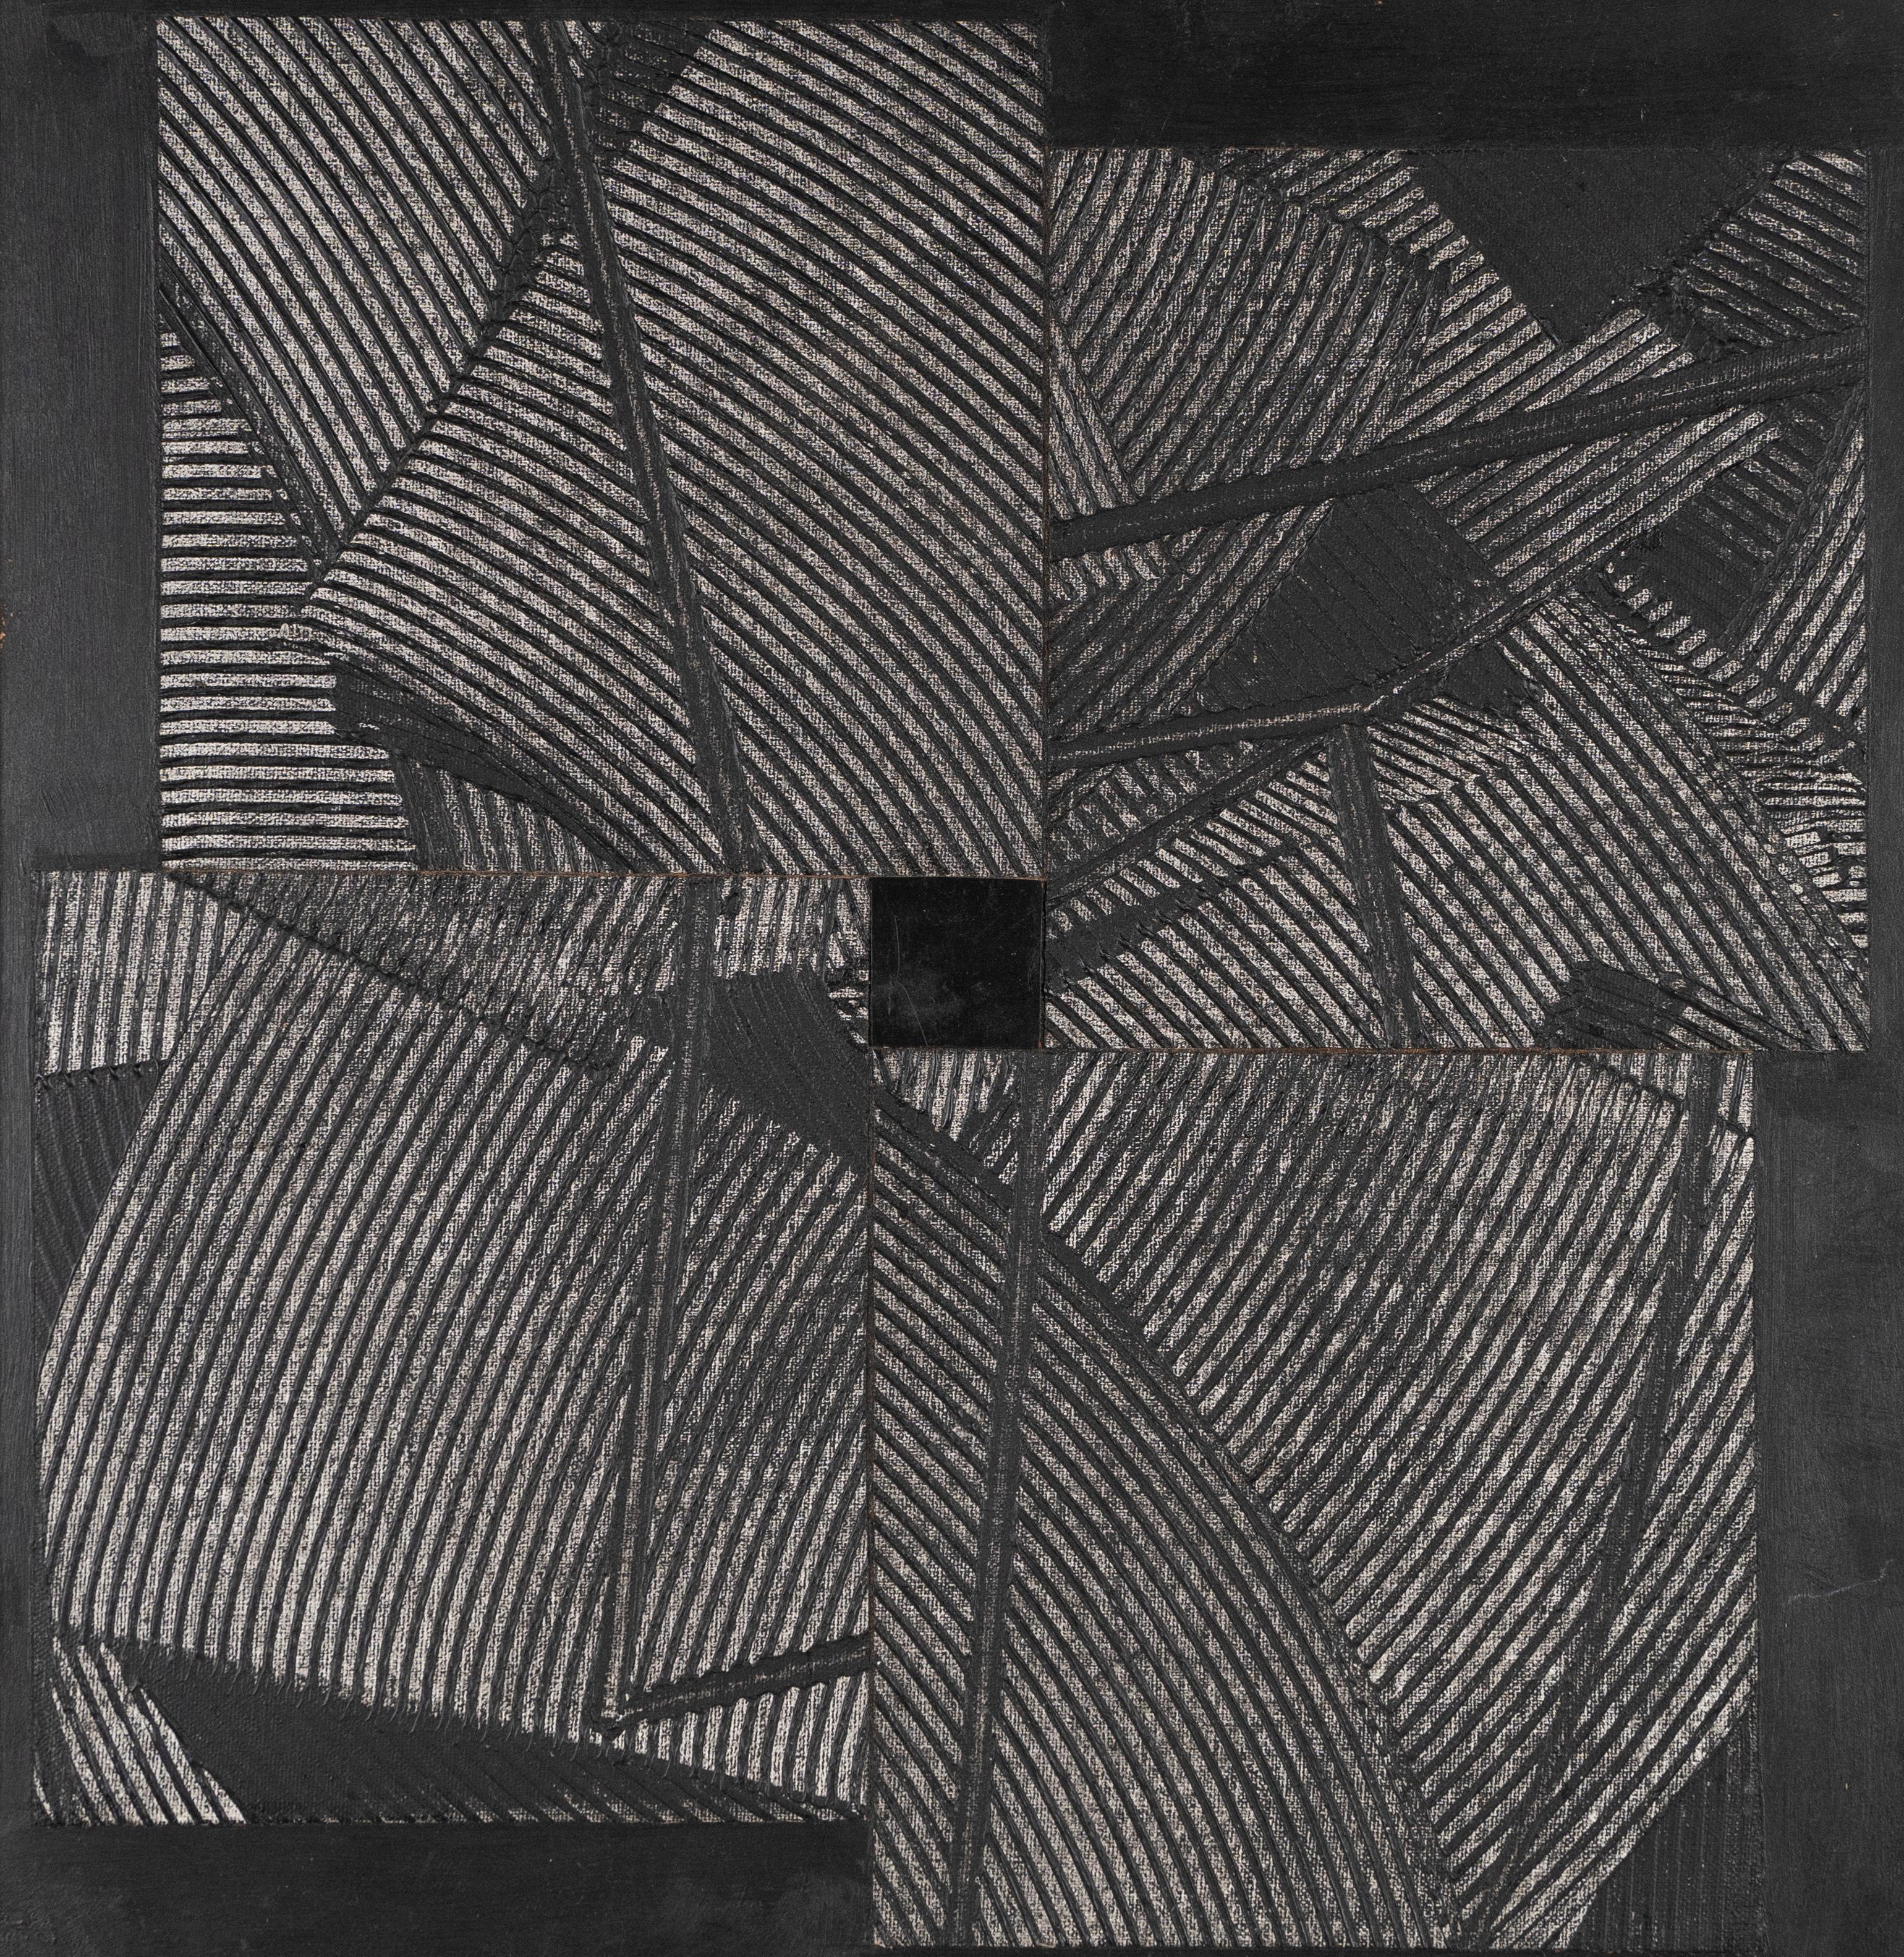 Geometric Abstract Oil Painting Textured Black & Grey Duanye Hatchett Original 2